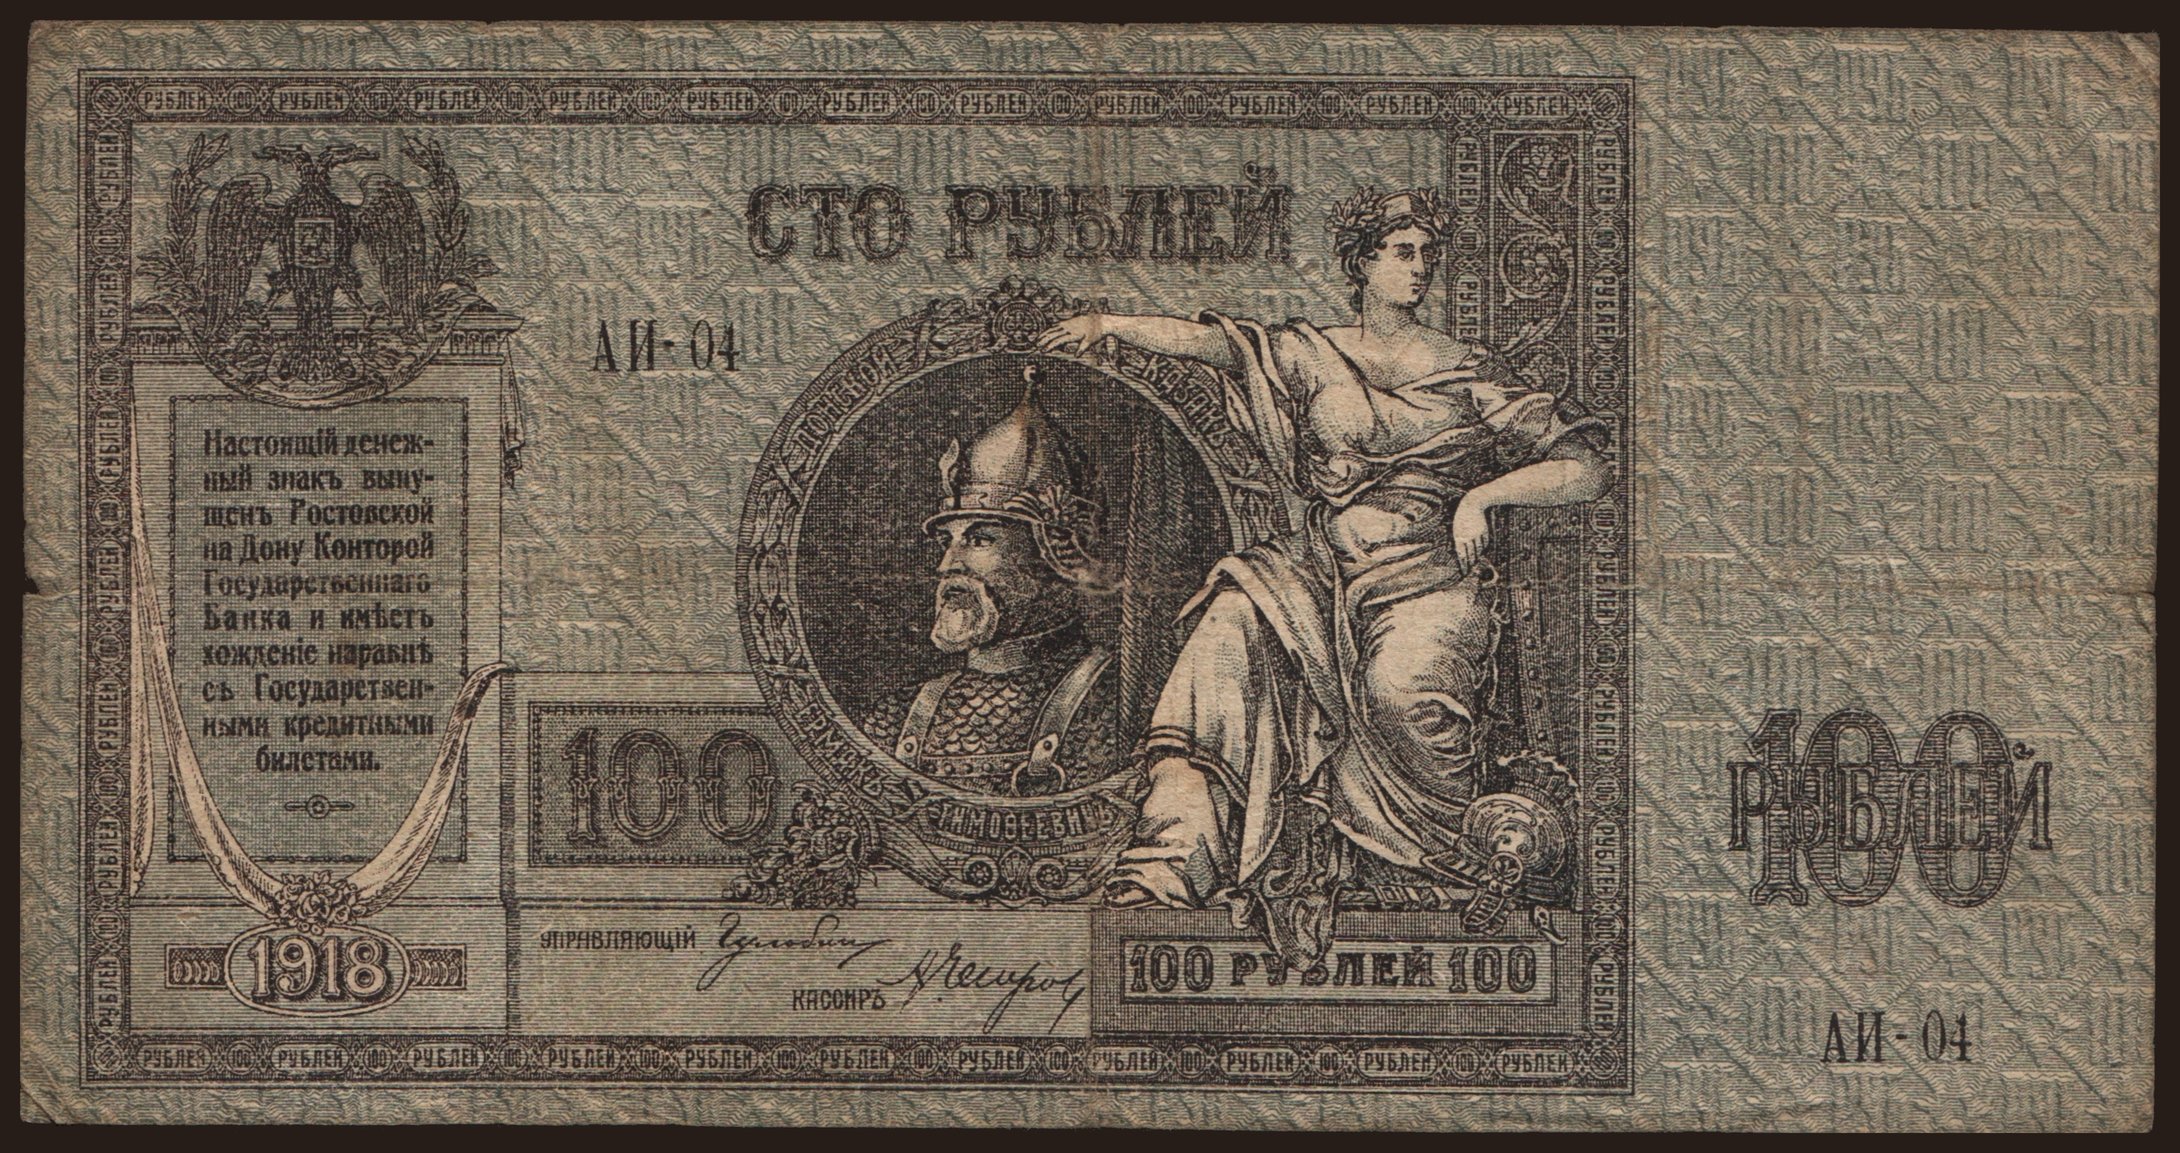 South Russia, 100 rubel, 1918